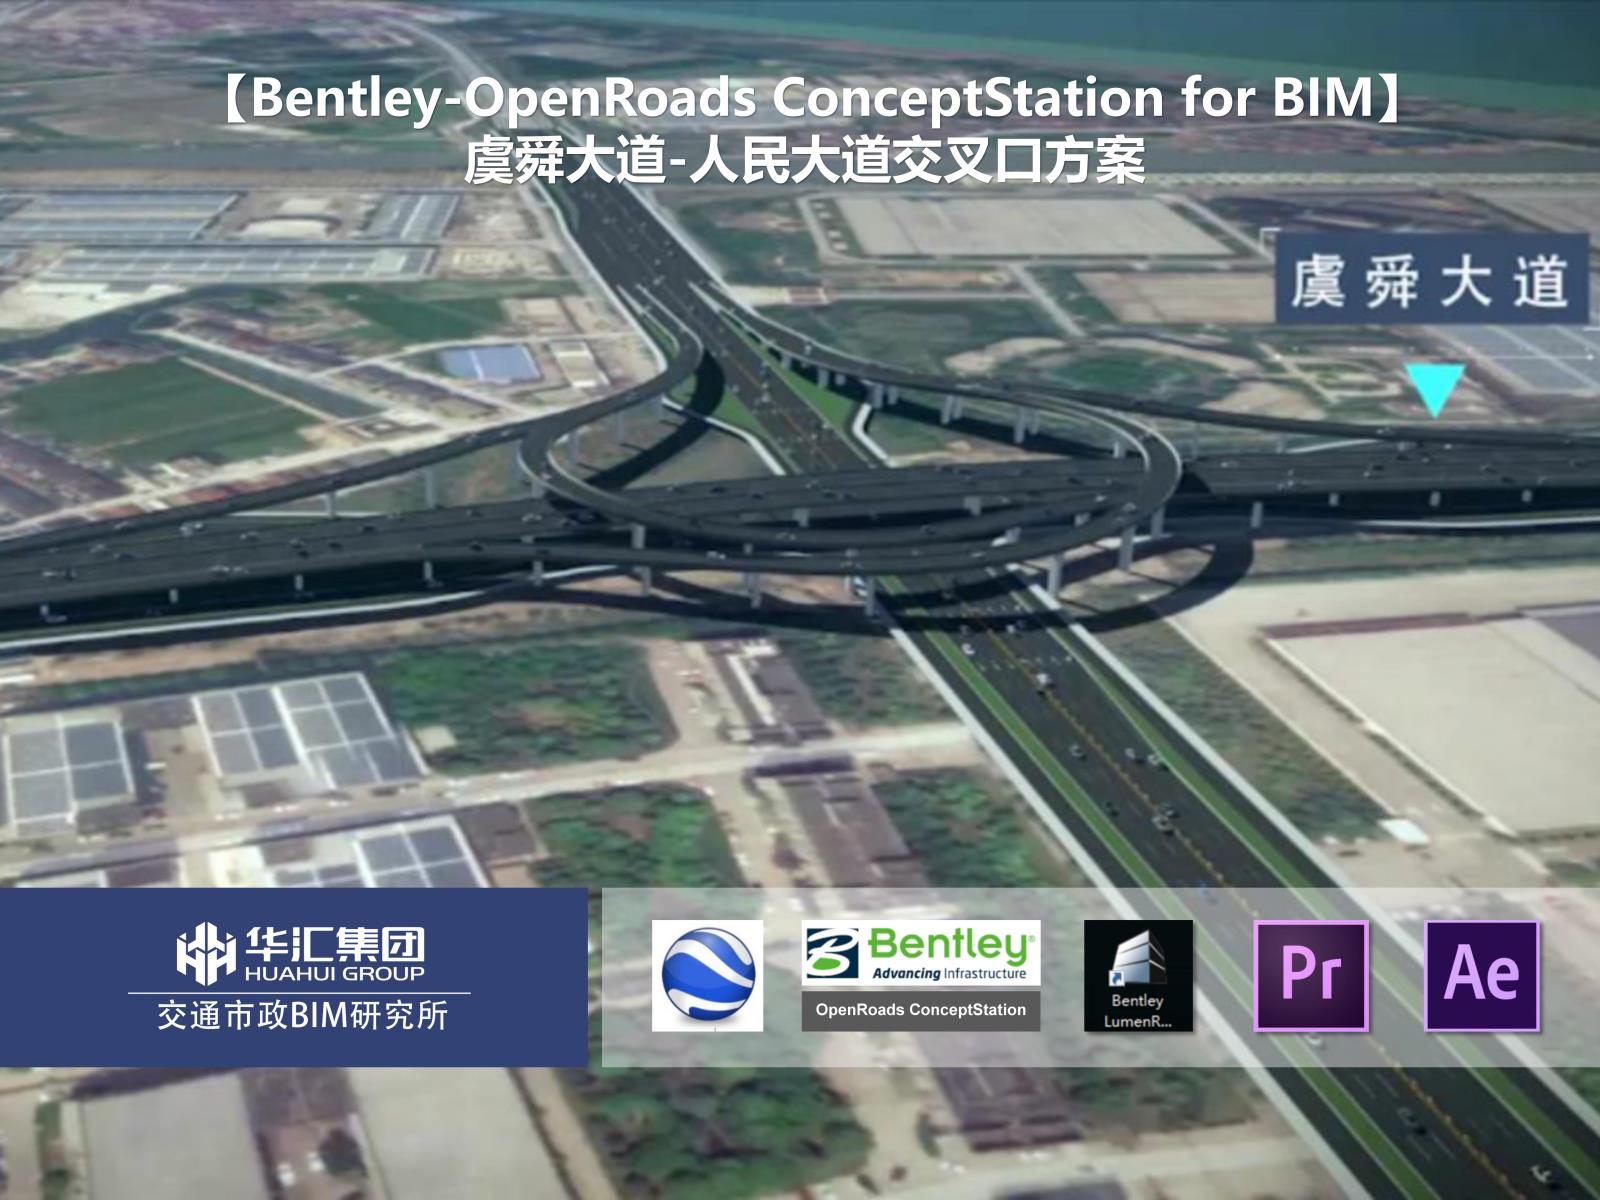 【Bentley-OpenRoads ConceptStation】虞舜大道-人民大道交叉口方案